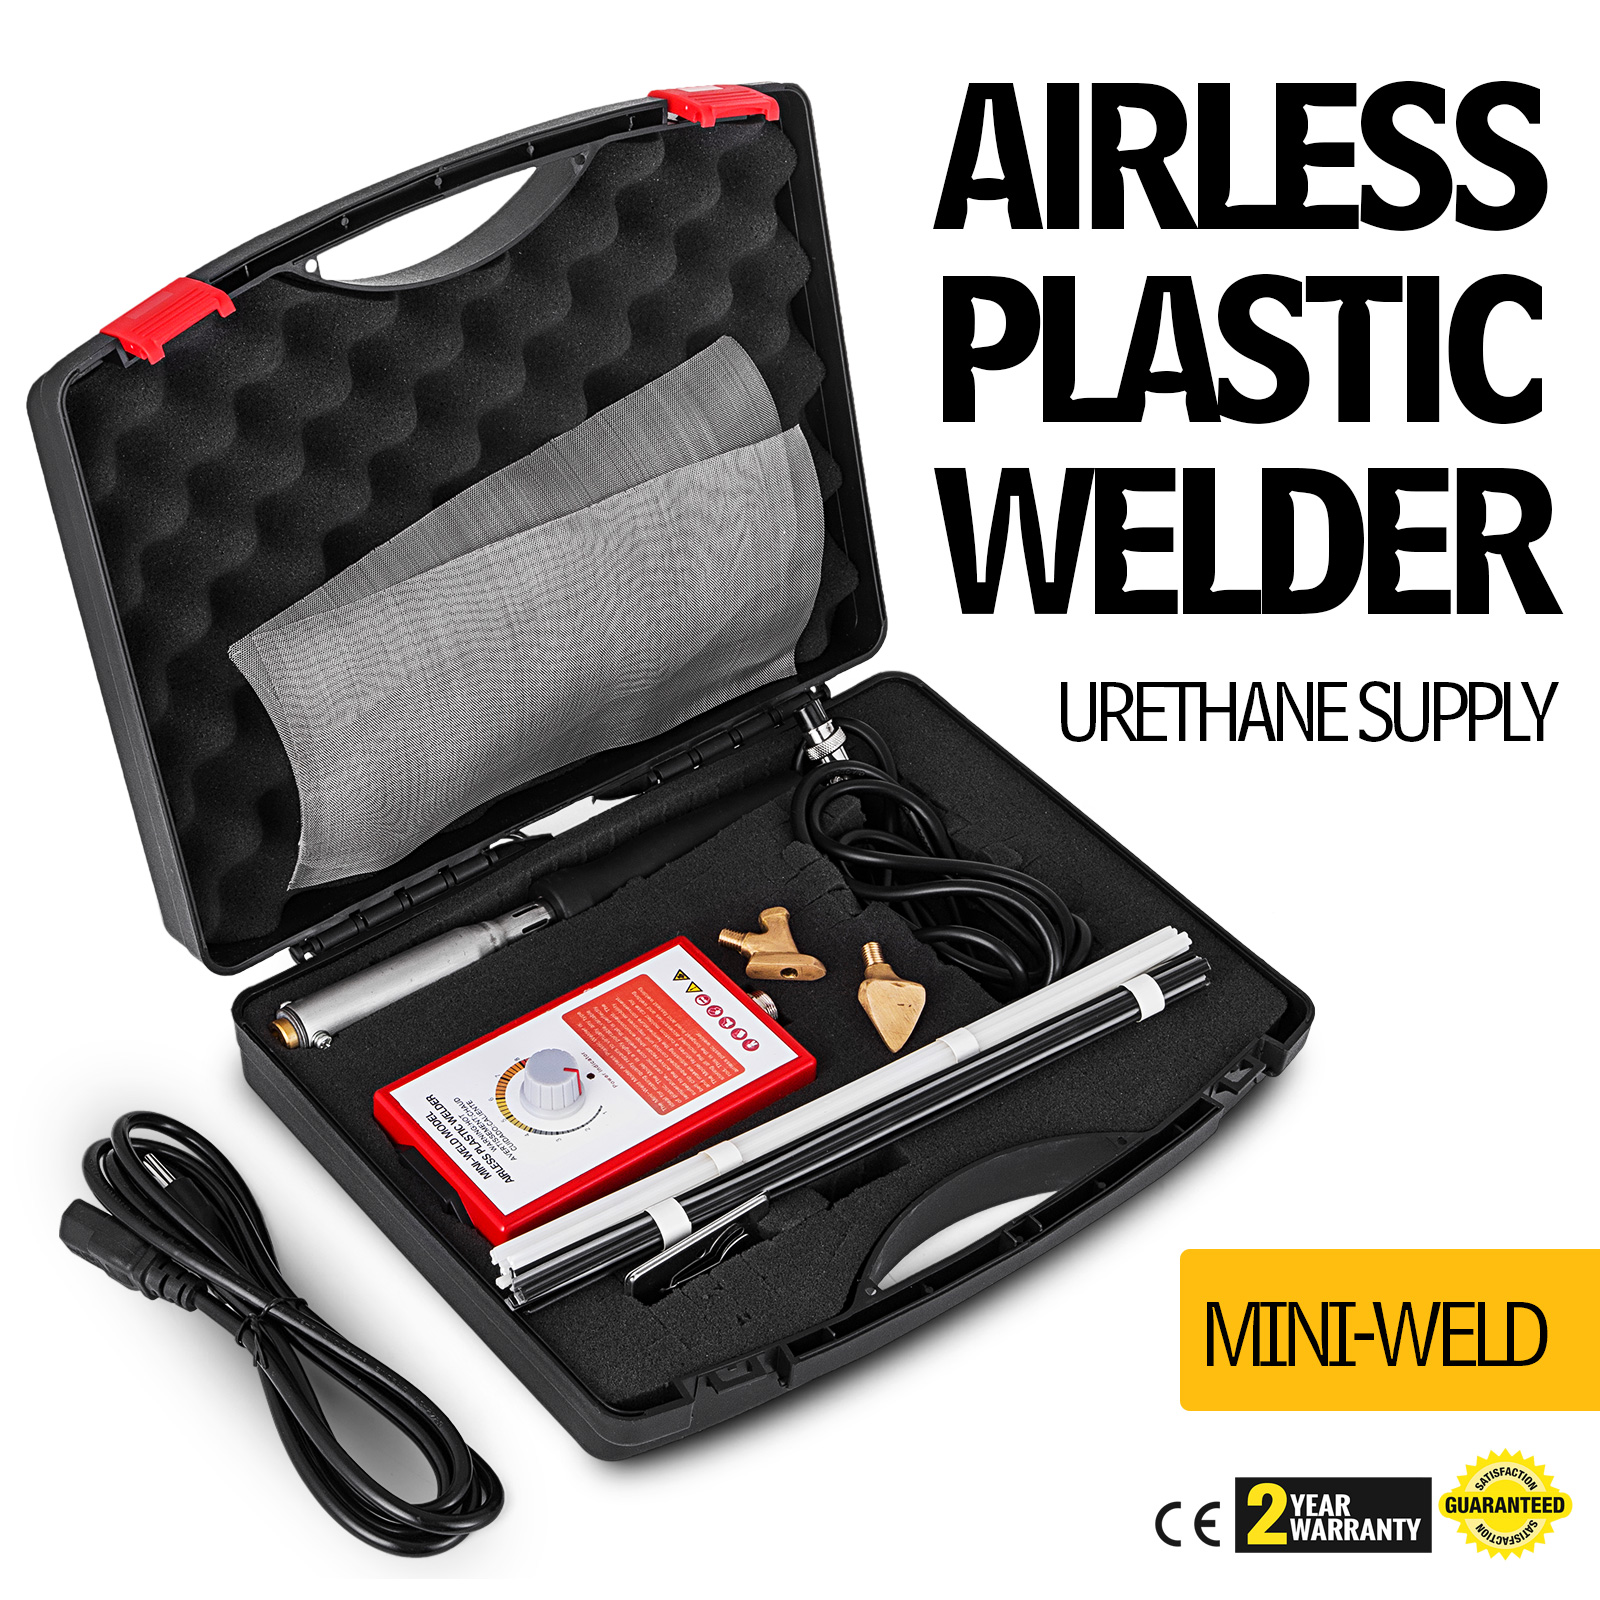 VEVOR Airless Plastic Welder Mini Weld Model 7 Variable Temperature Rods Tips от Vevor Many GEOs